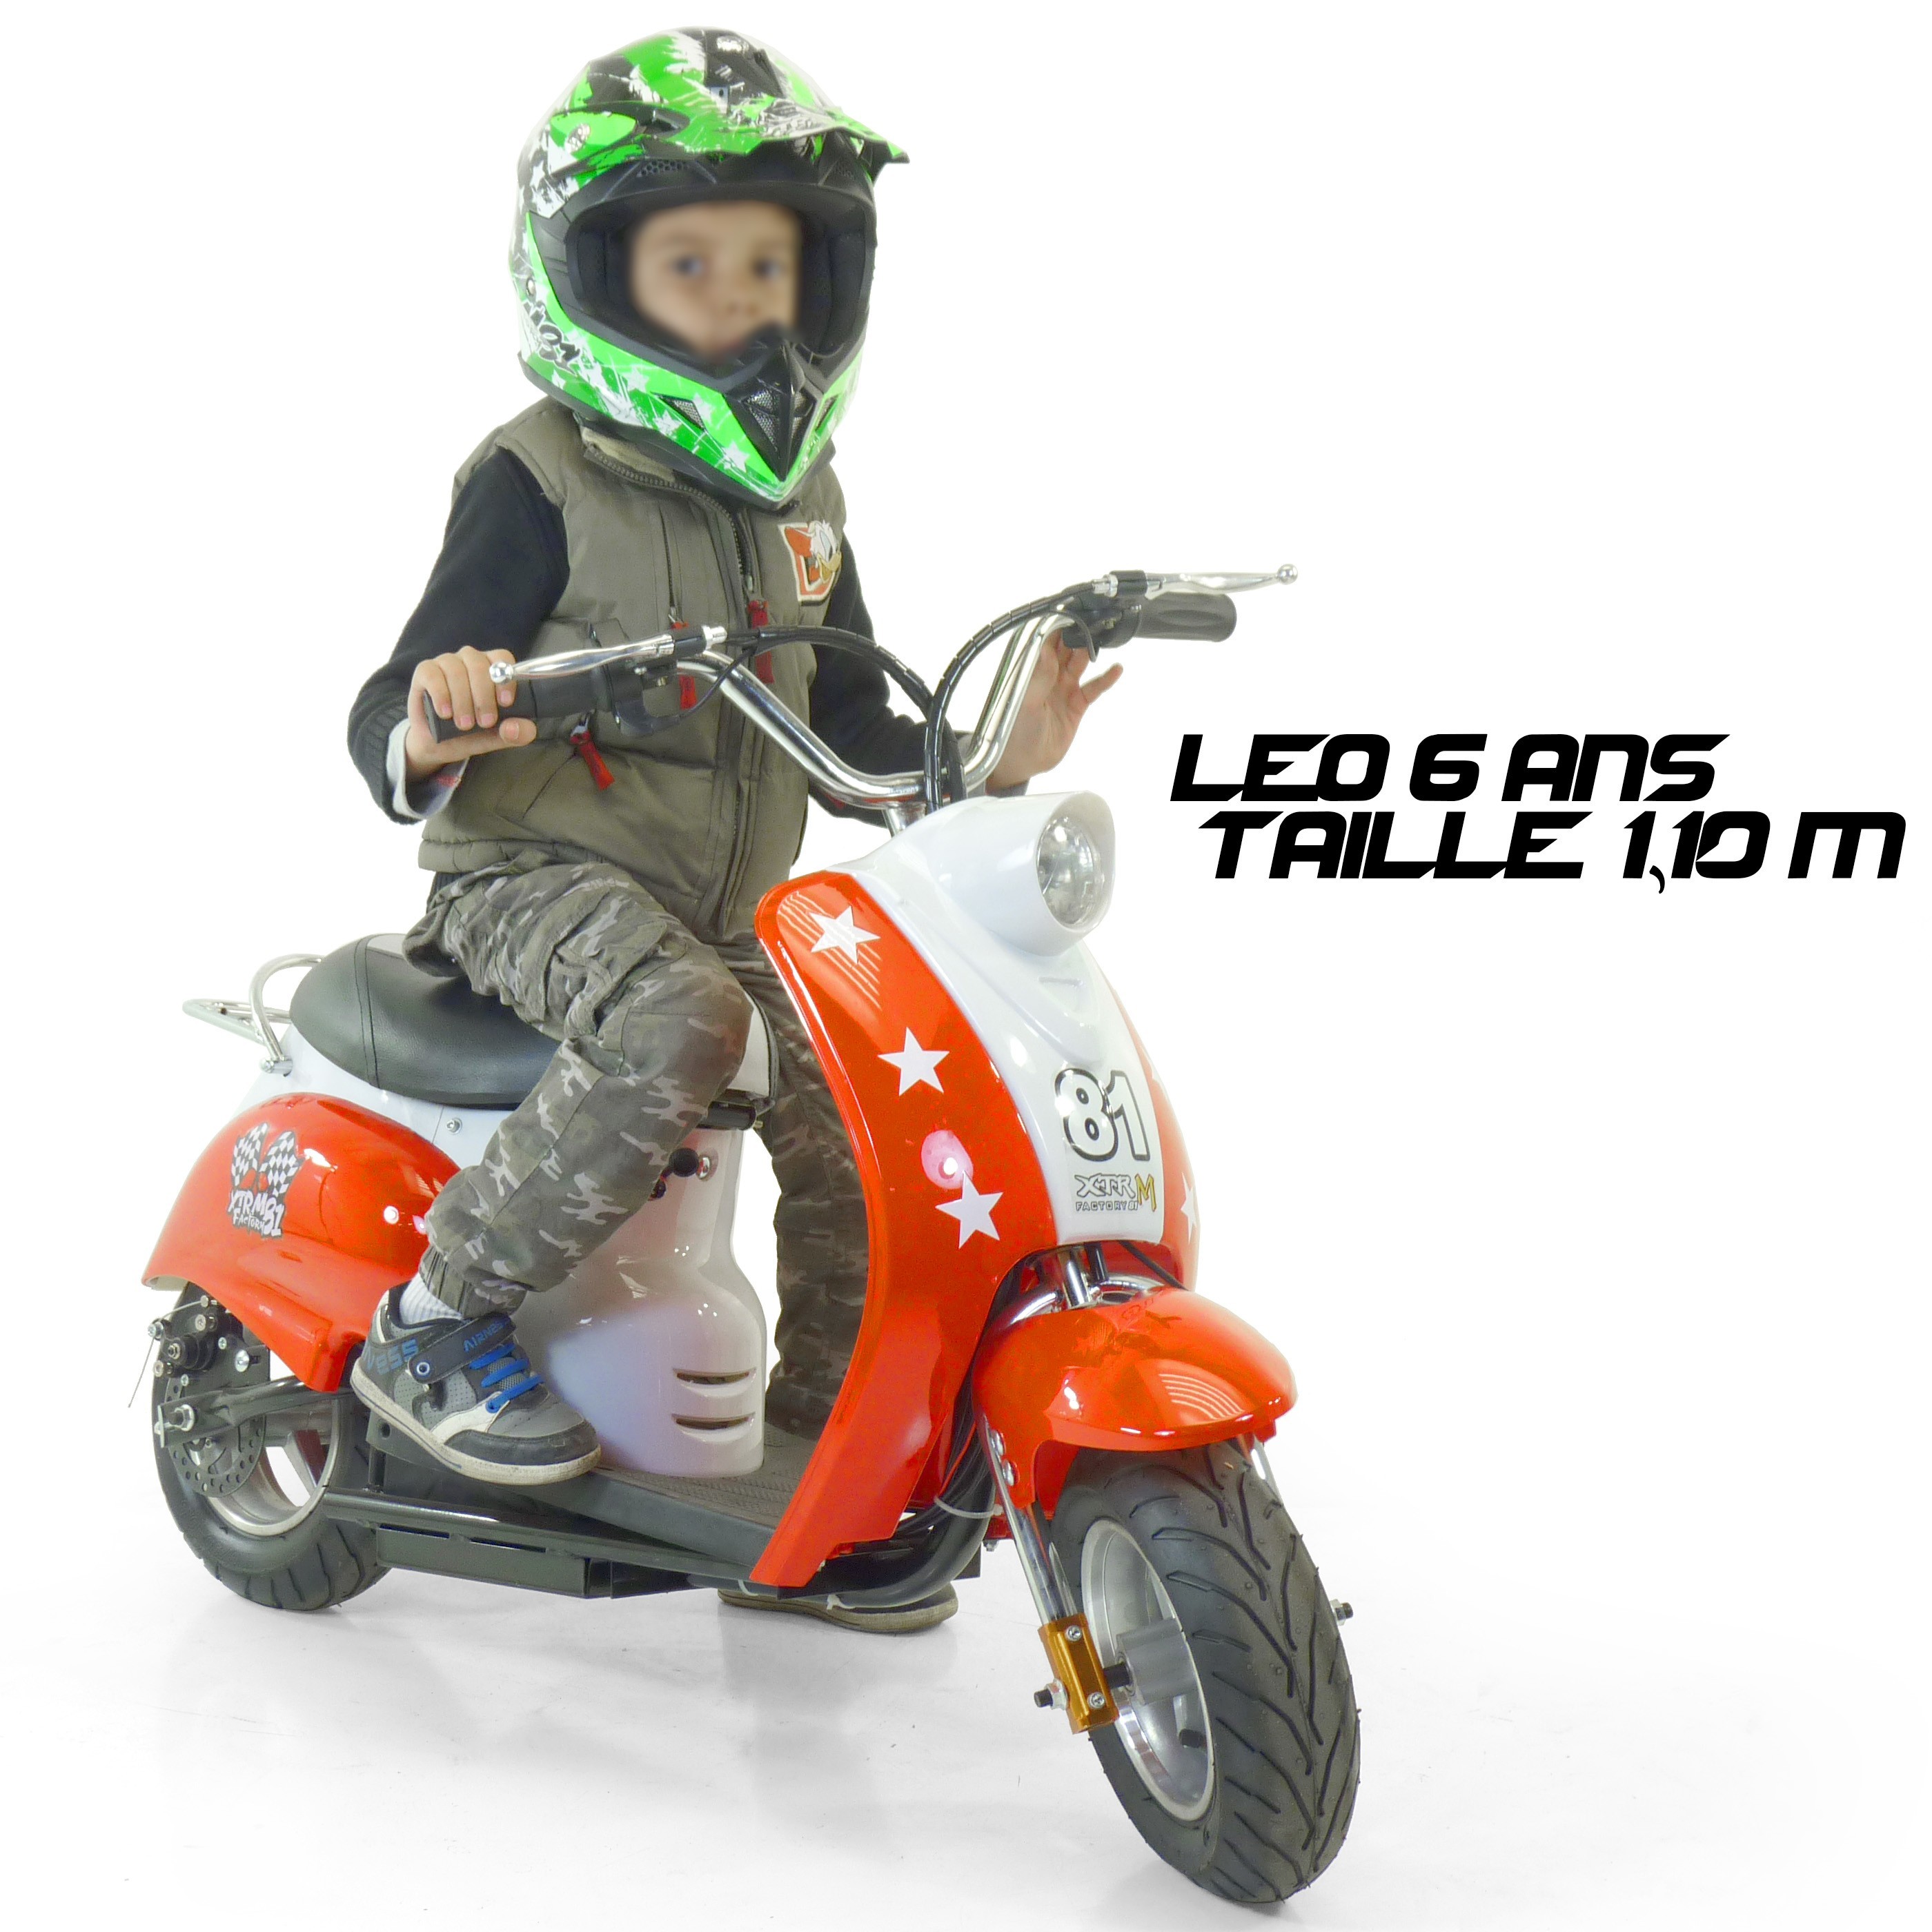 Moto électrique 125 homologuée E.ODIN - Quads Motos Familly Pièces quads  34